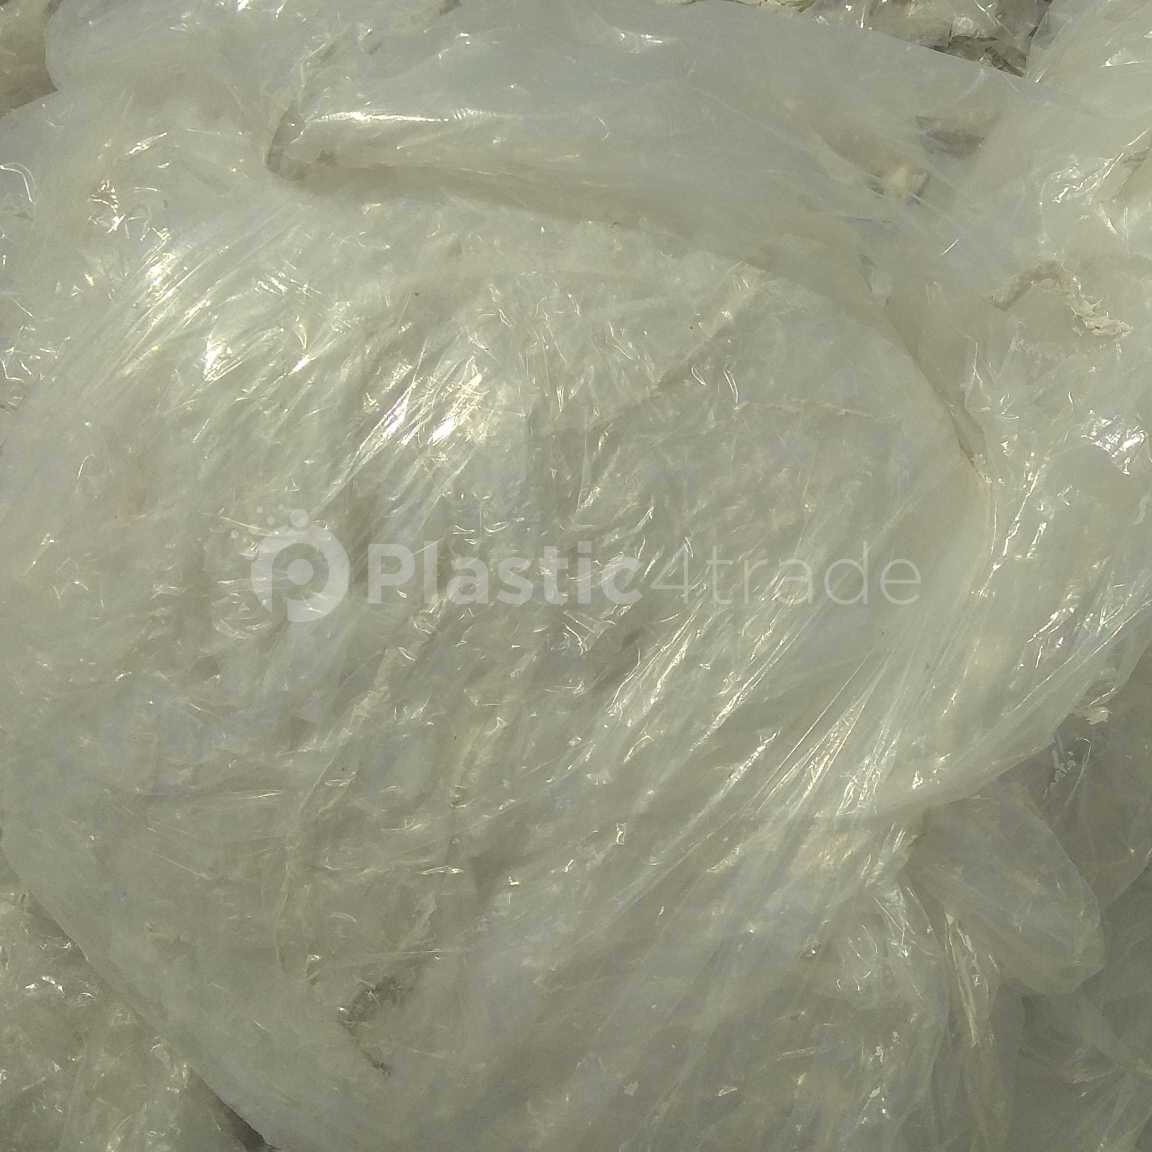 PP DANA PP Reprocess Granule Injection Molding gujarat india Plastic4trade